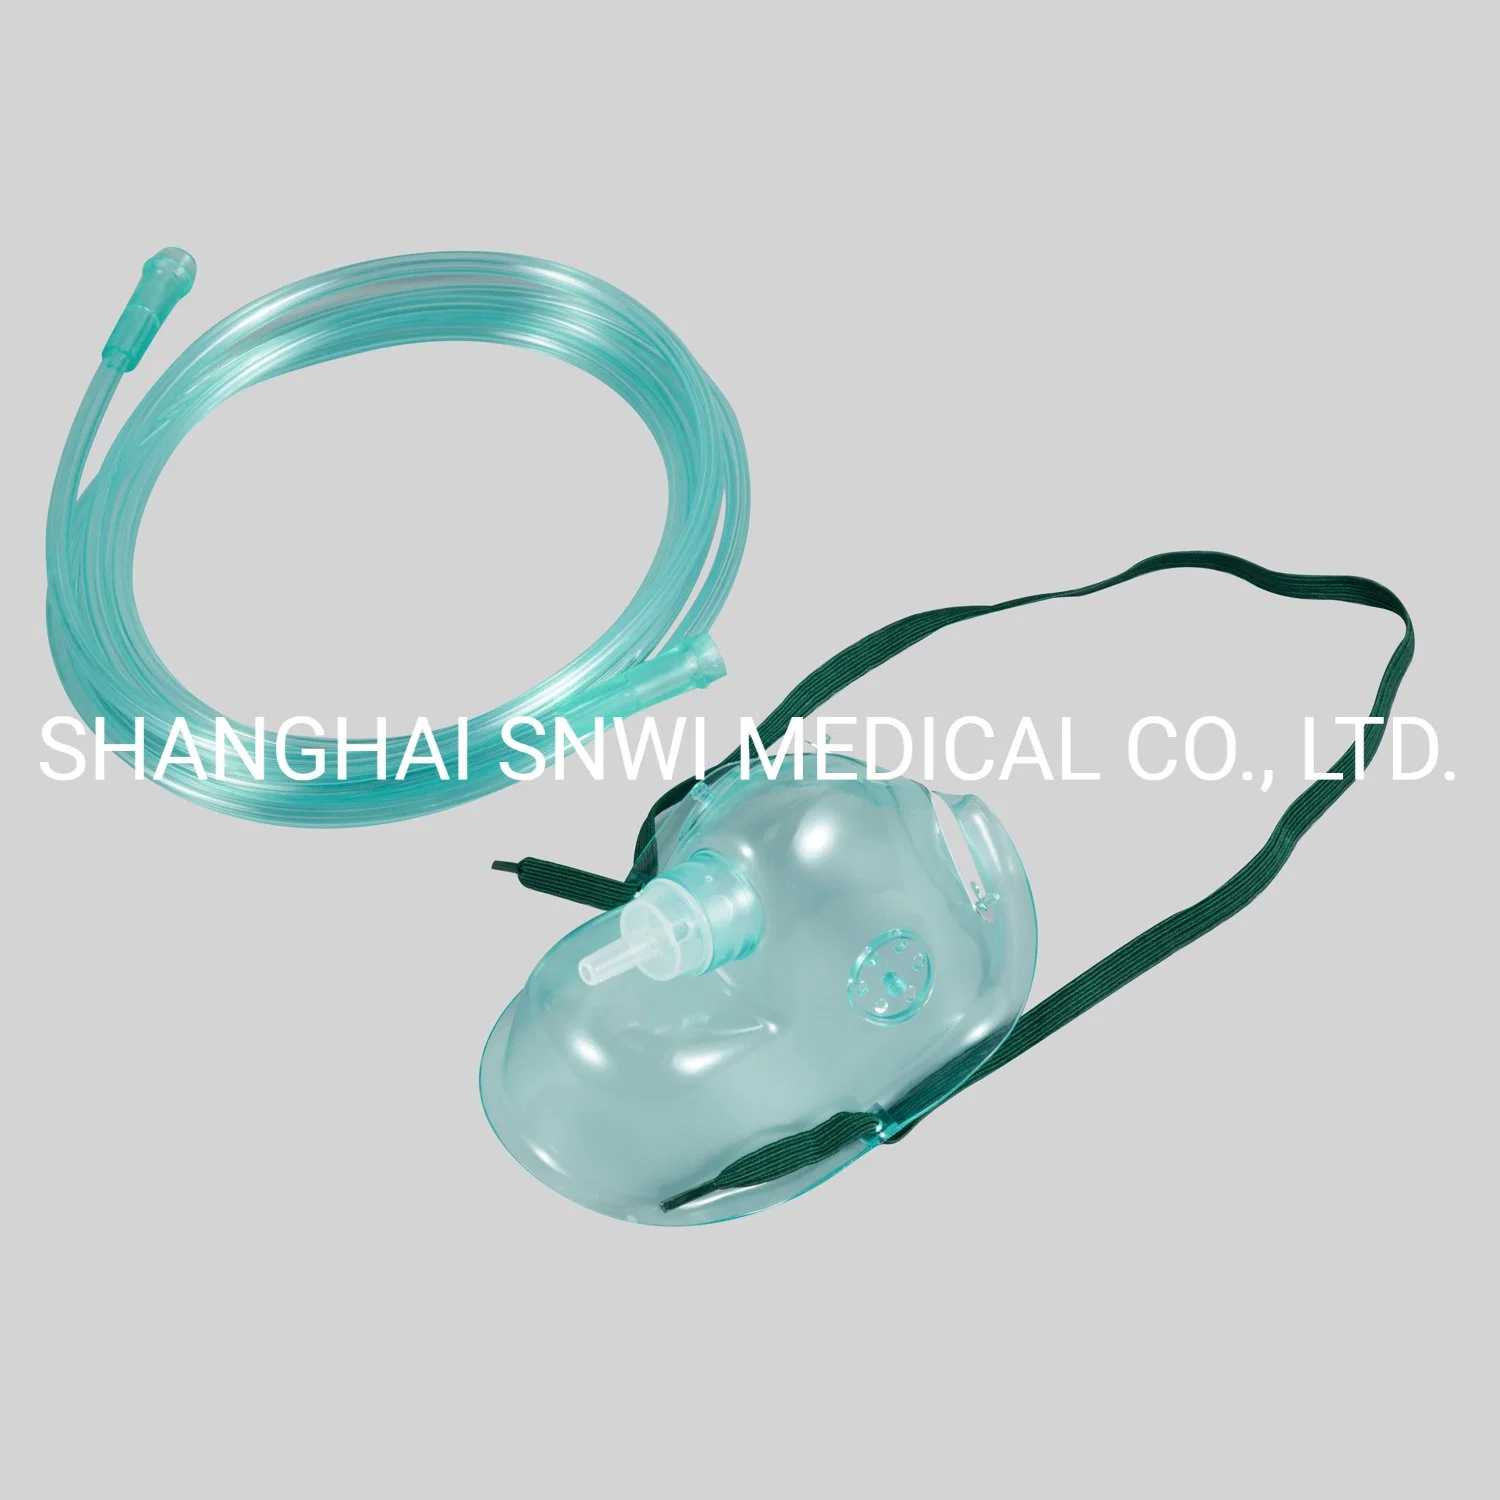 CE ISO معتمد مستشفى طبي PVC (دائرة ظاهرية دائمة) قناع الوجه/جهاز تنبيص الأكسجين القابل للاستخدام مرة أخرى Mask Kit/Venturi Mask/الأكسجين Mask مع حقيبة الخزان